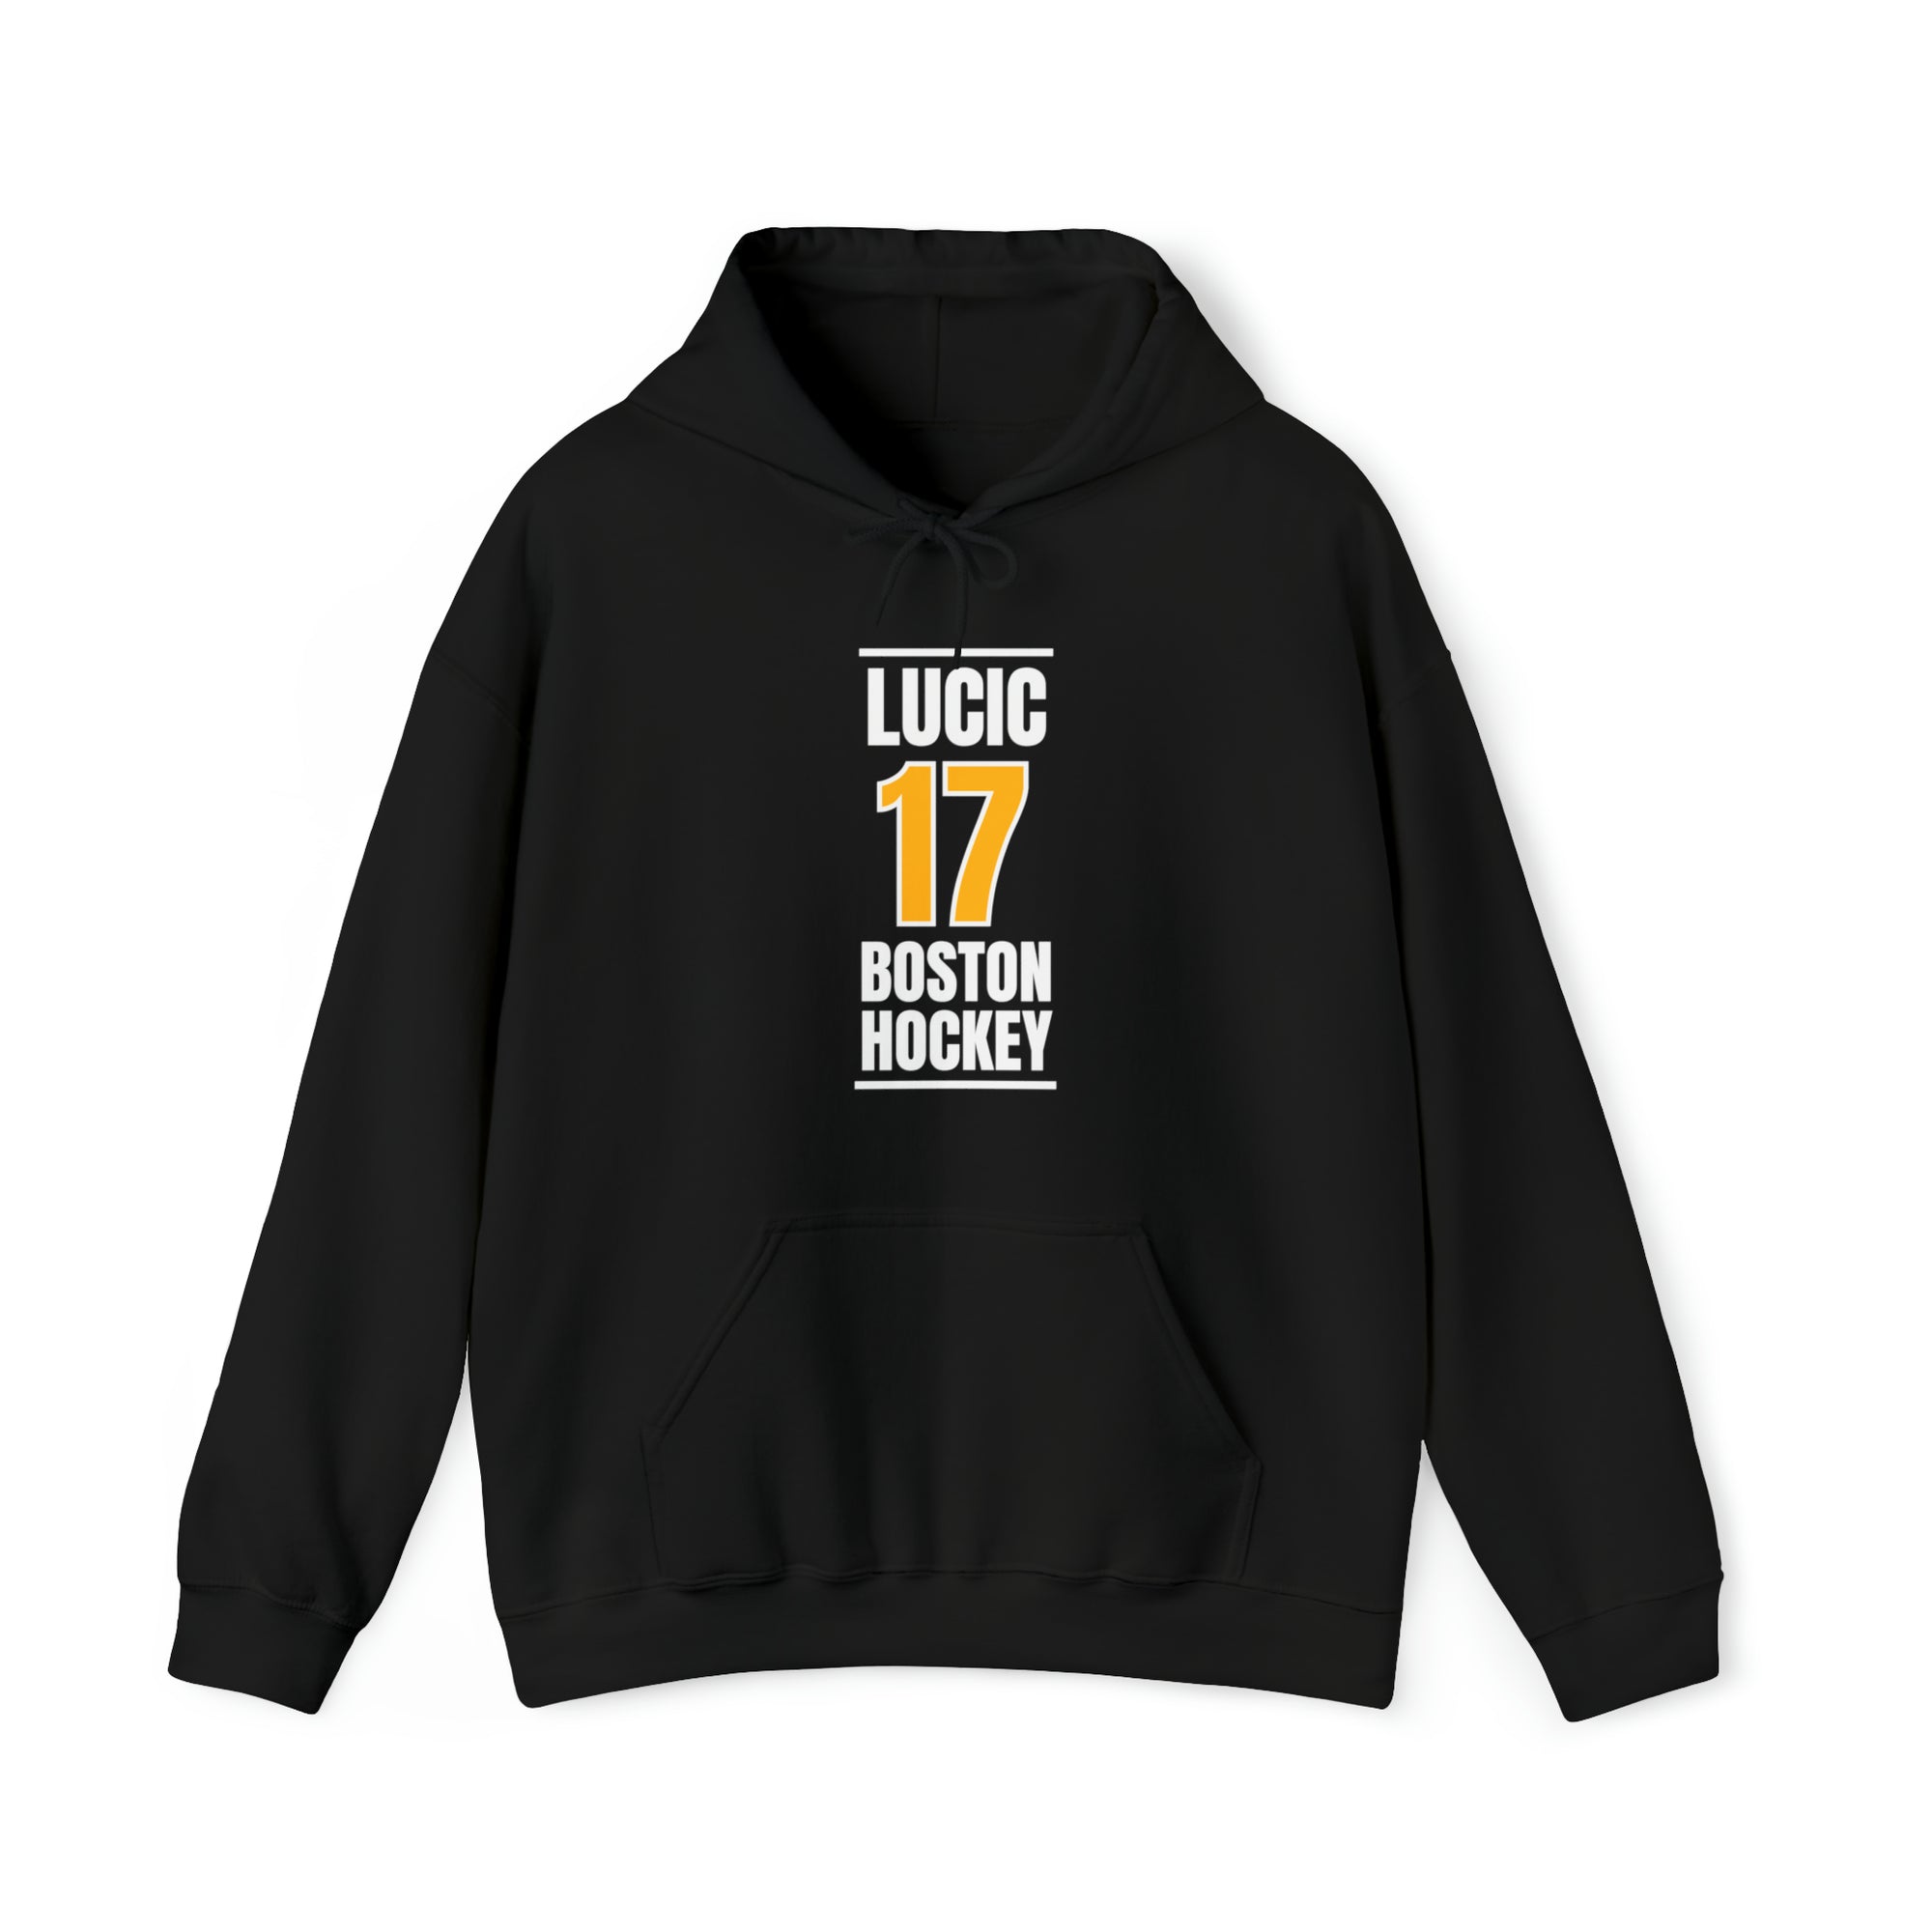 Lucic 17 Boston Hockey Gold Vertical Design Unisex Hooded Sweatshirt